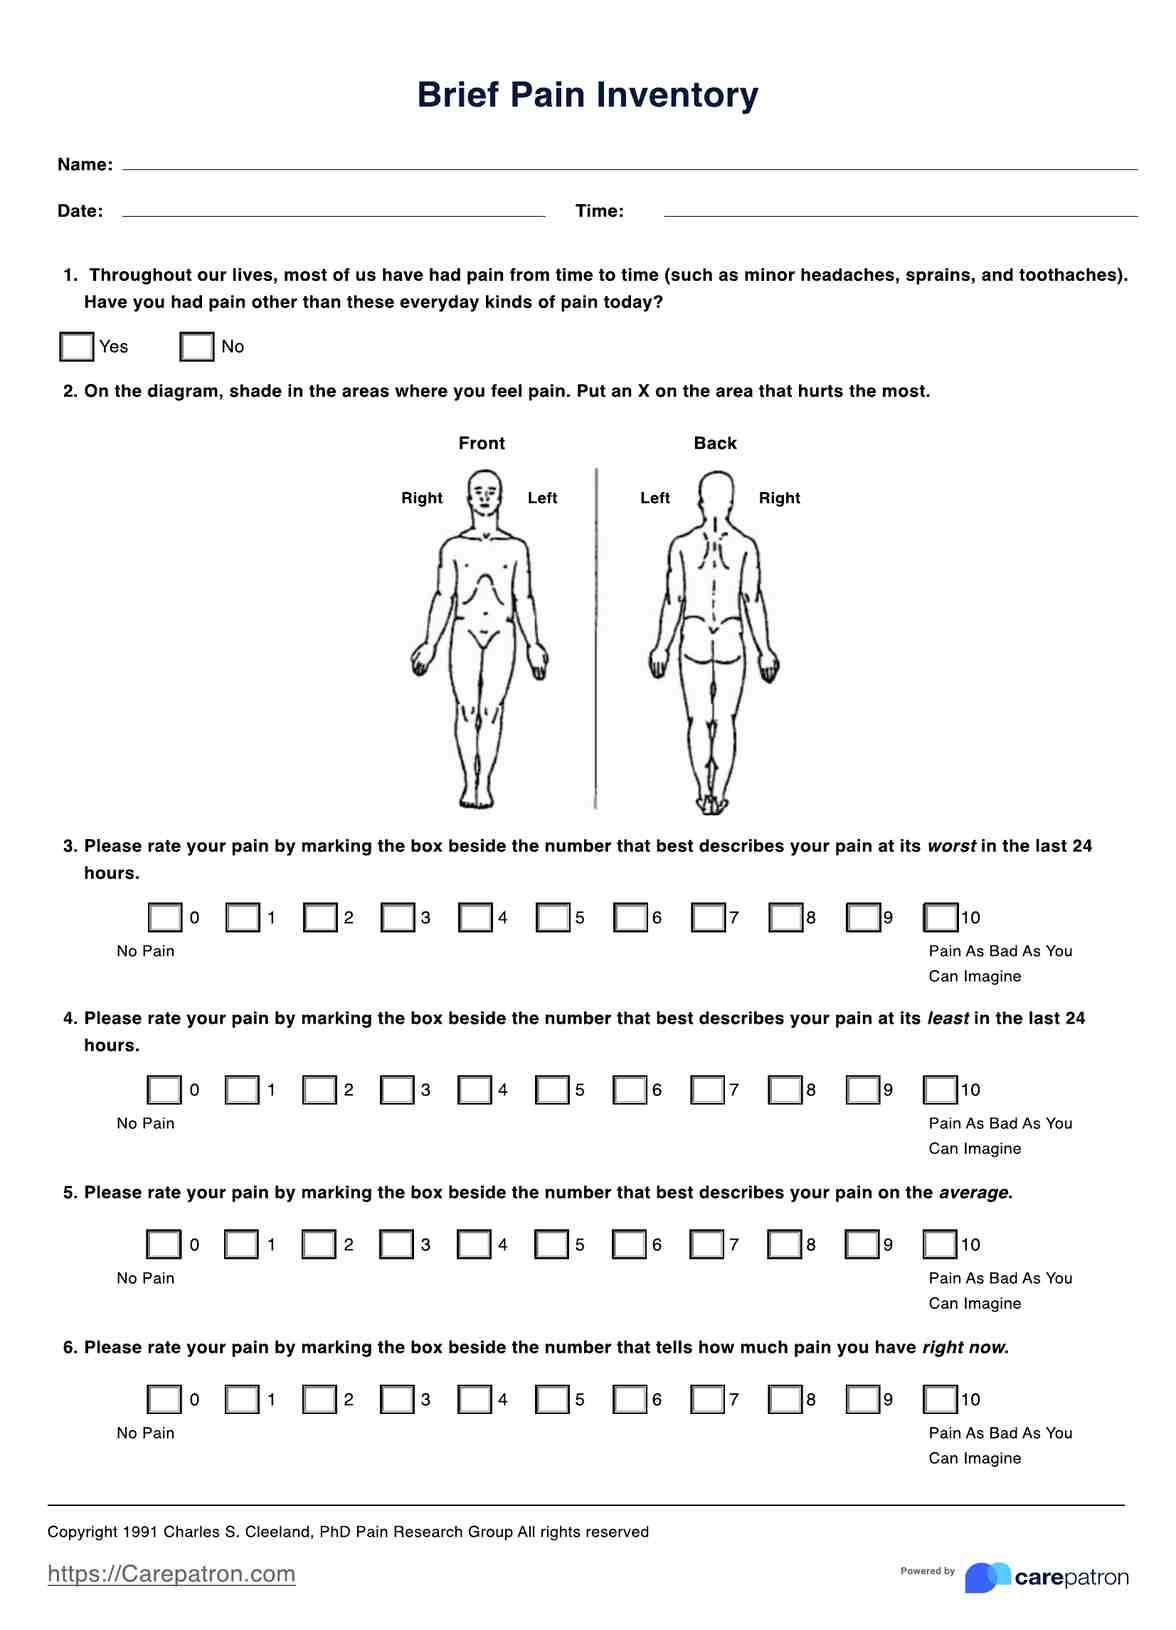 Brief Pain Inventory PDF Example